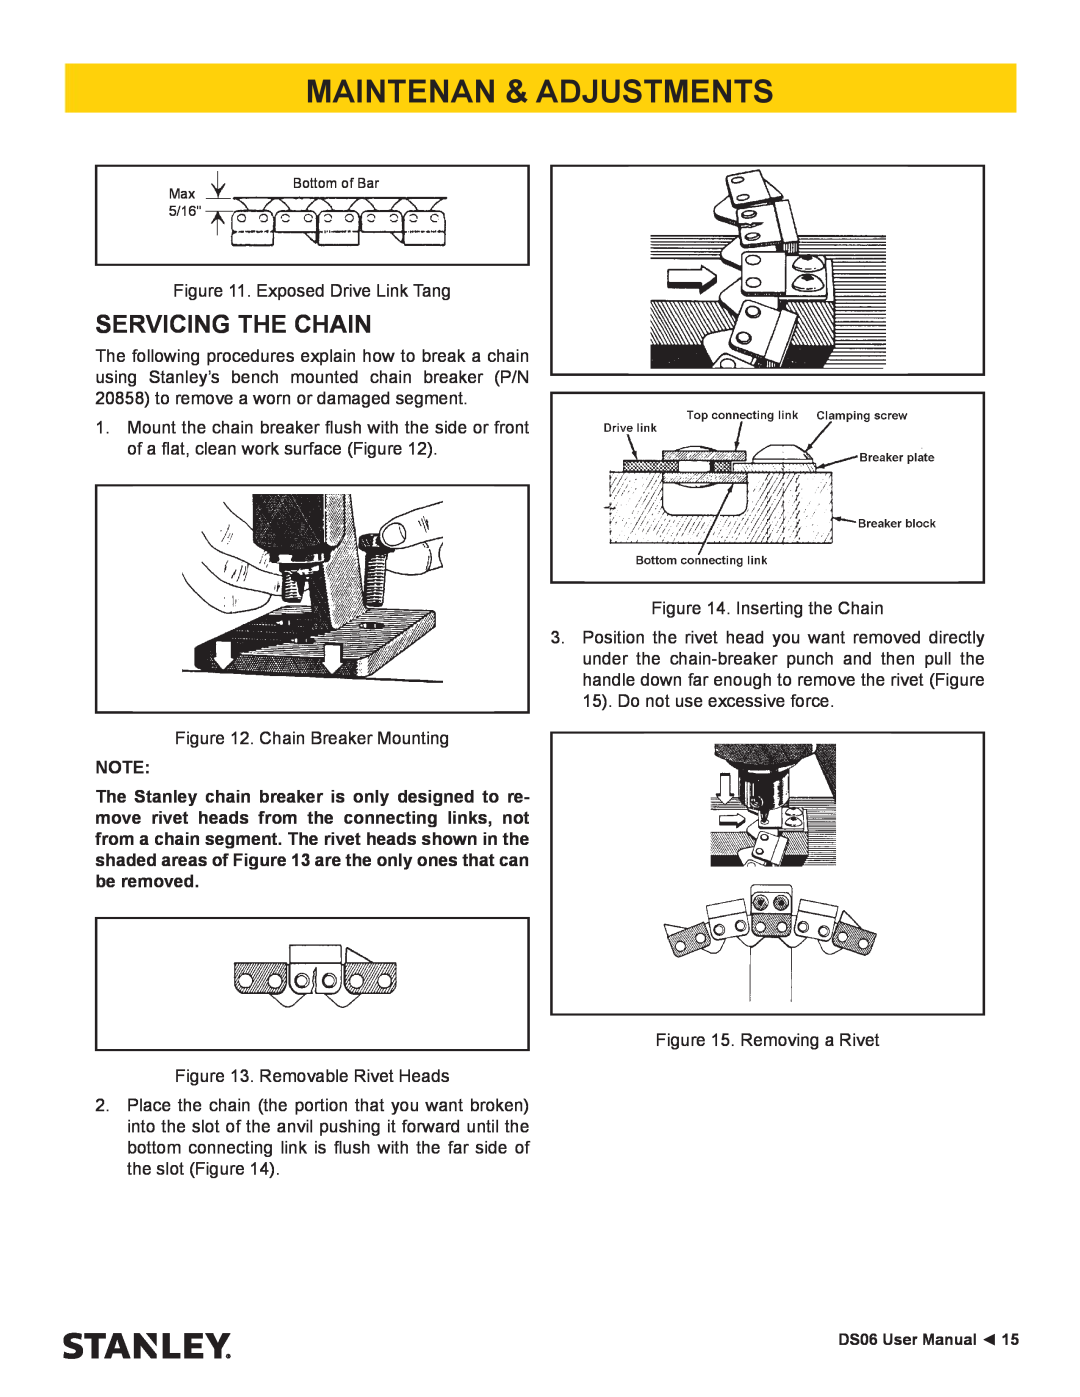 Stanley Black & Decker DS06 user manual Servicing The Chain, Maintenan & Adjustments 